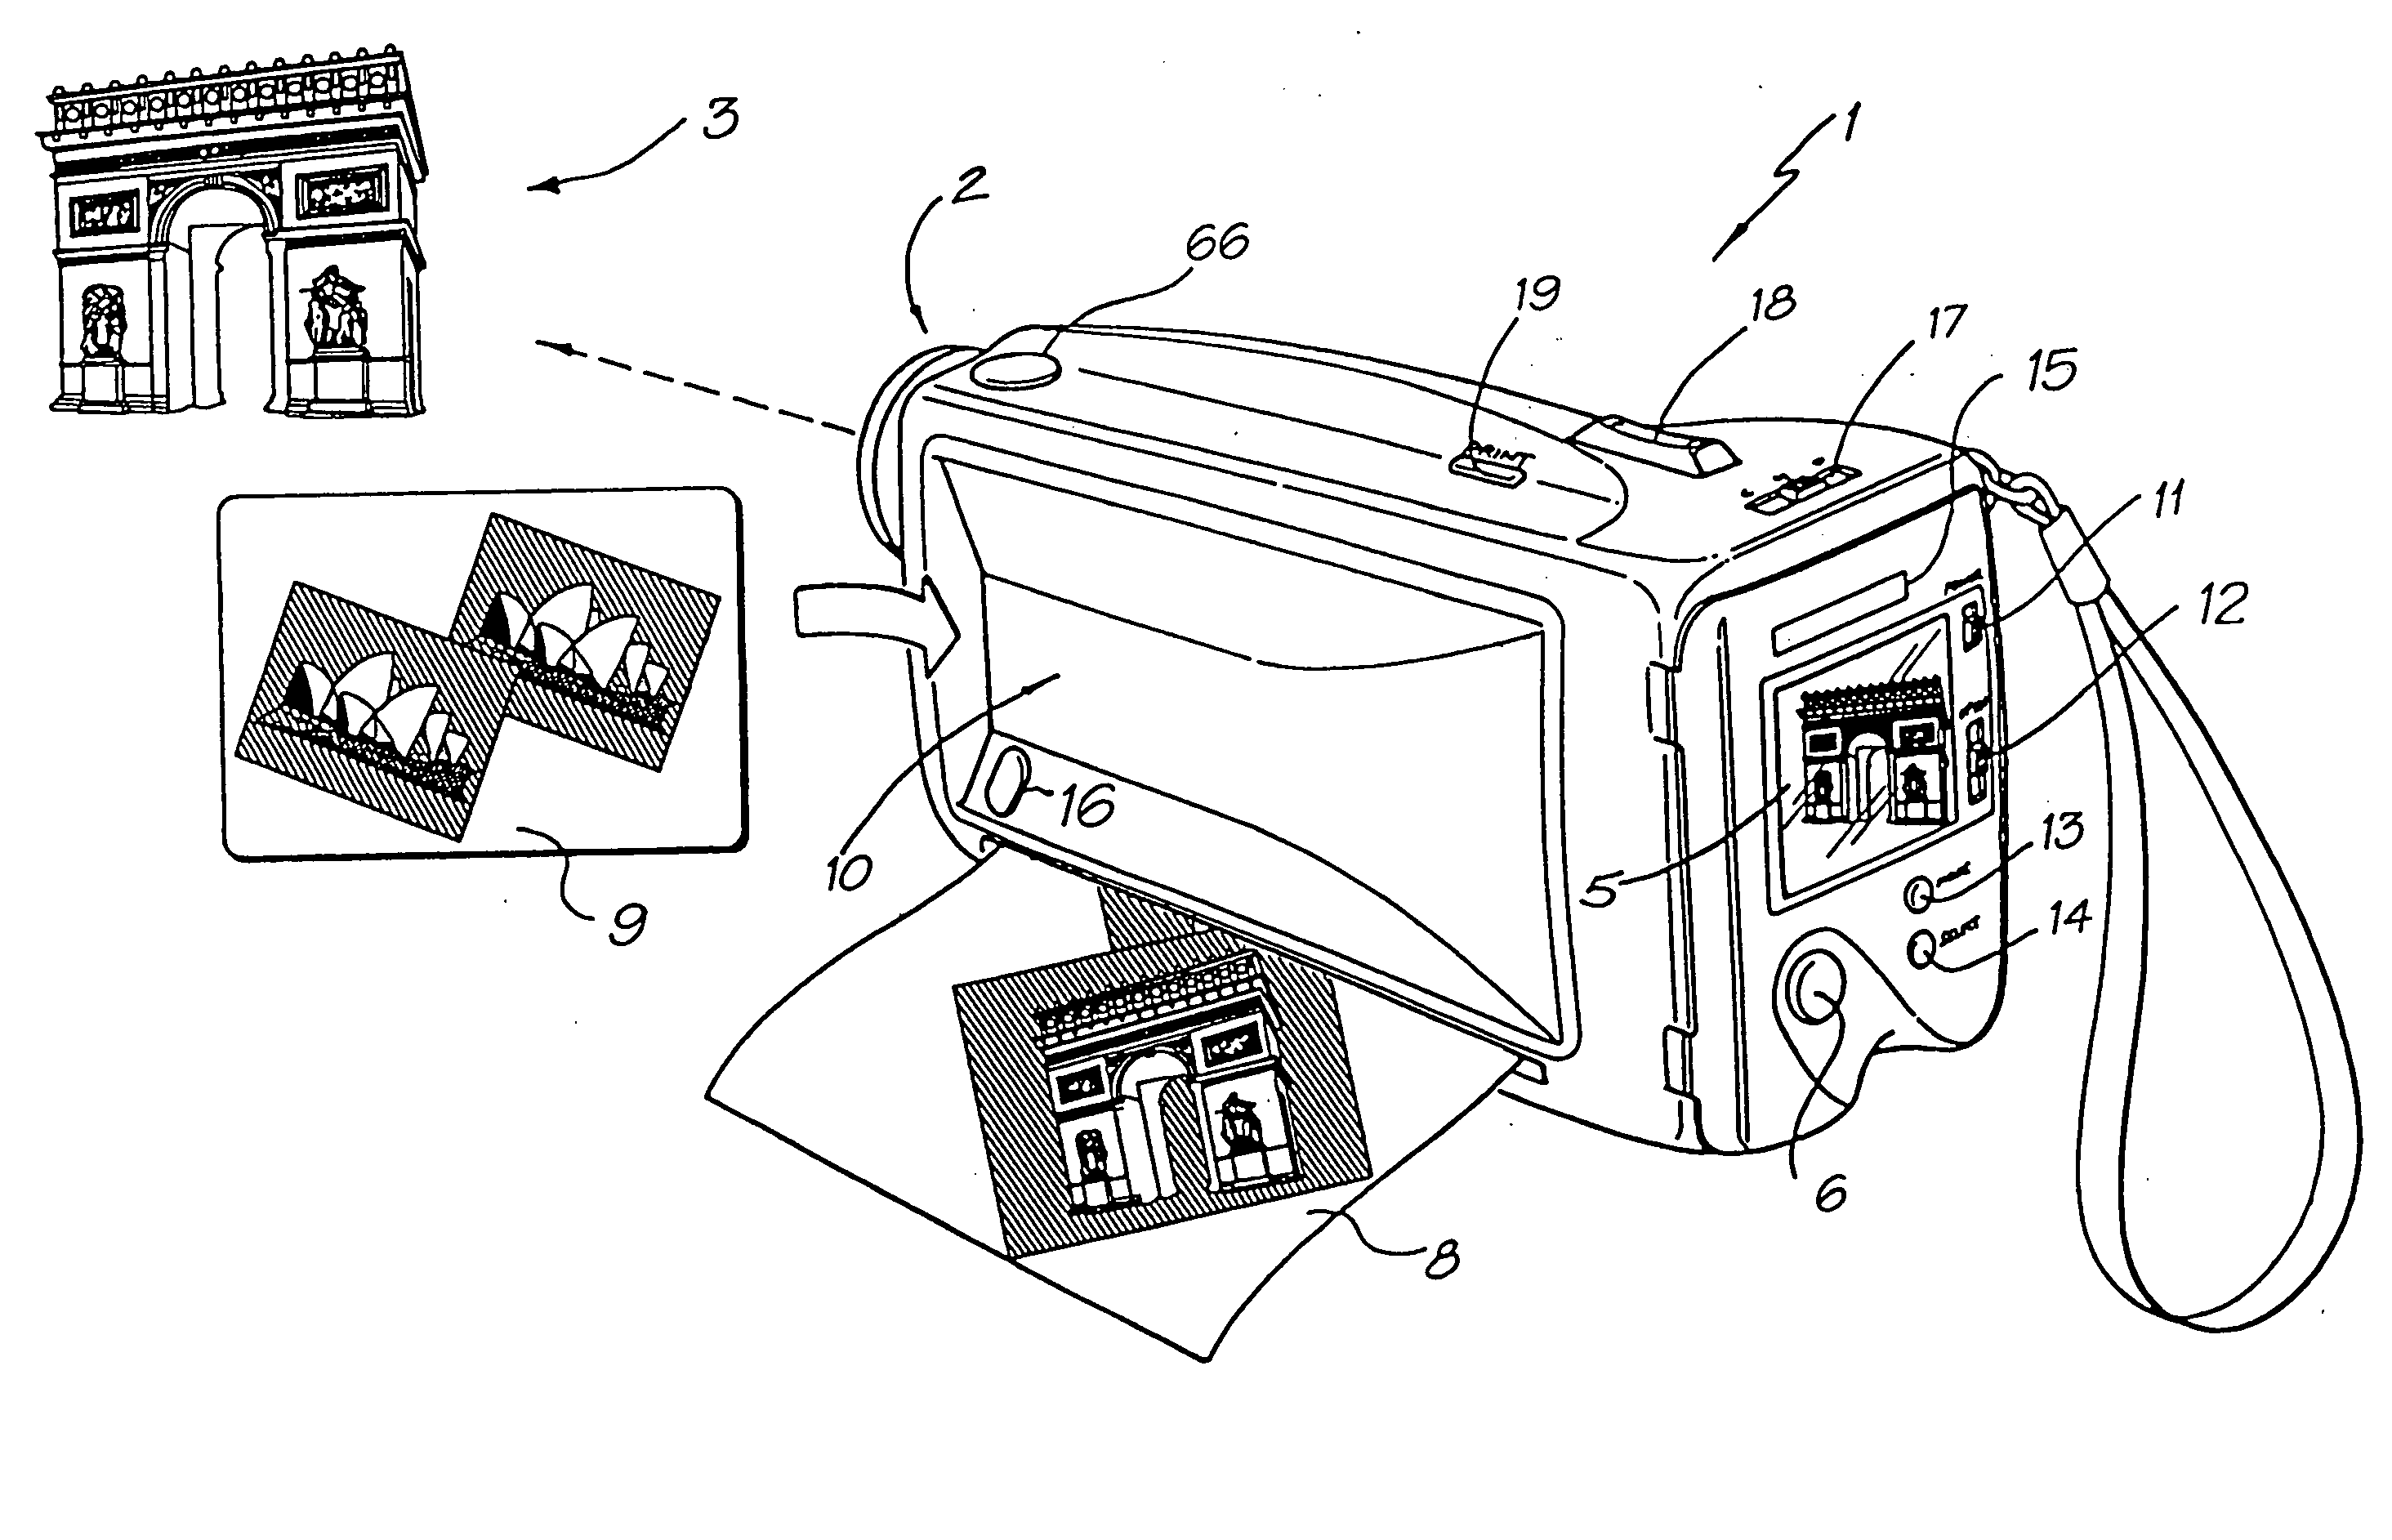 Portable camera with inbuilt printer device